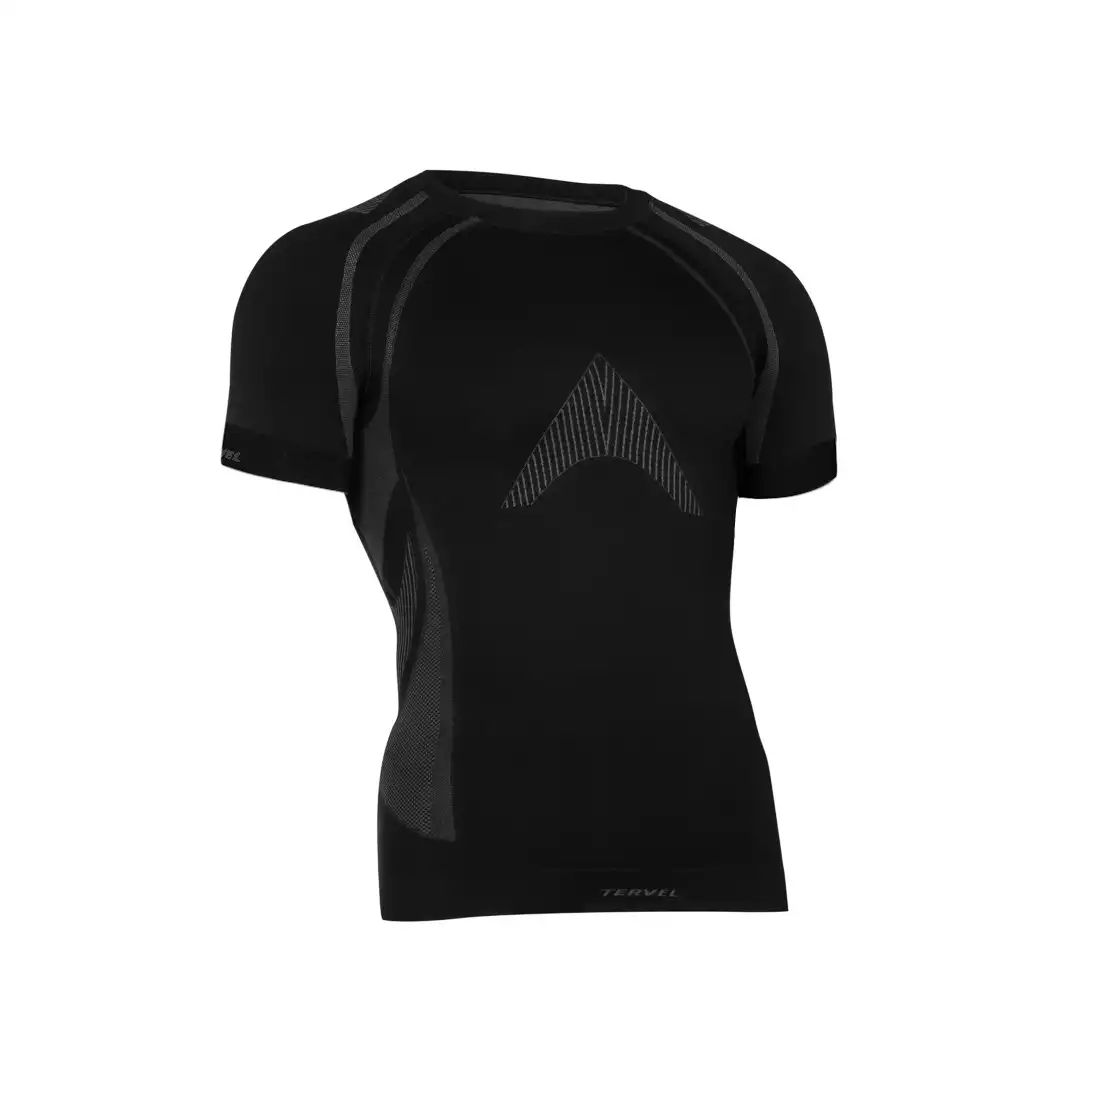 TERVEL - OPTILINE MOD-02 - męska koszulka termoaktywna, kolor: Czarno-szary